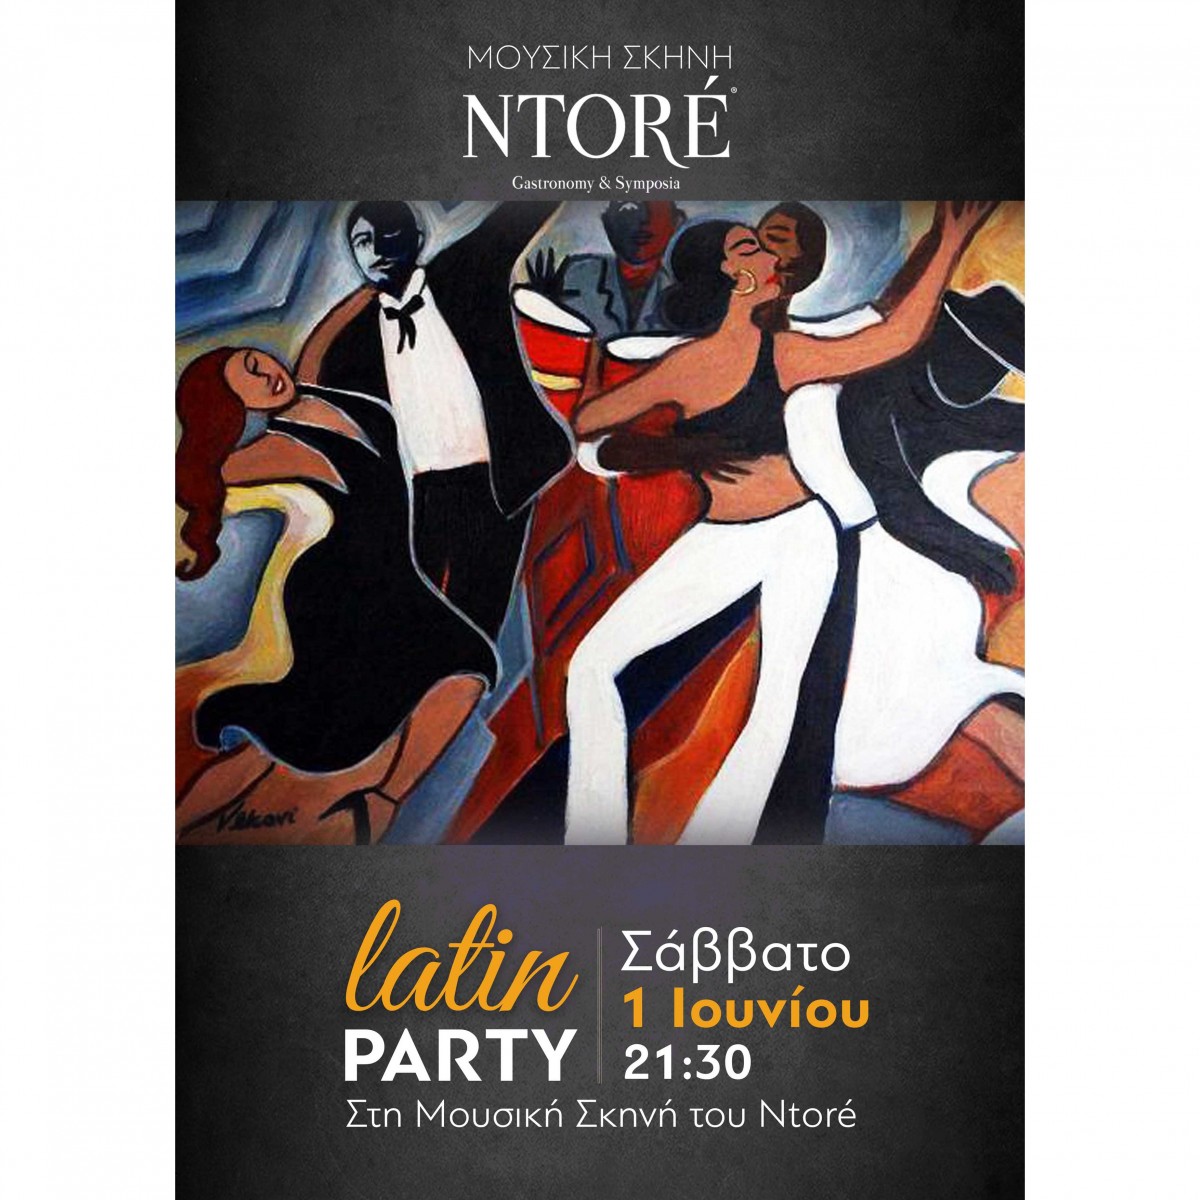 Latin Party στη Μουσική Σκηνή του Ntoré, Σάββατο 1 Ιουνίου, 21:30